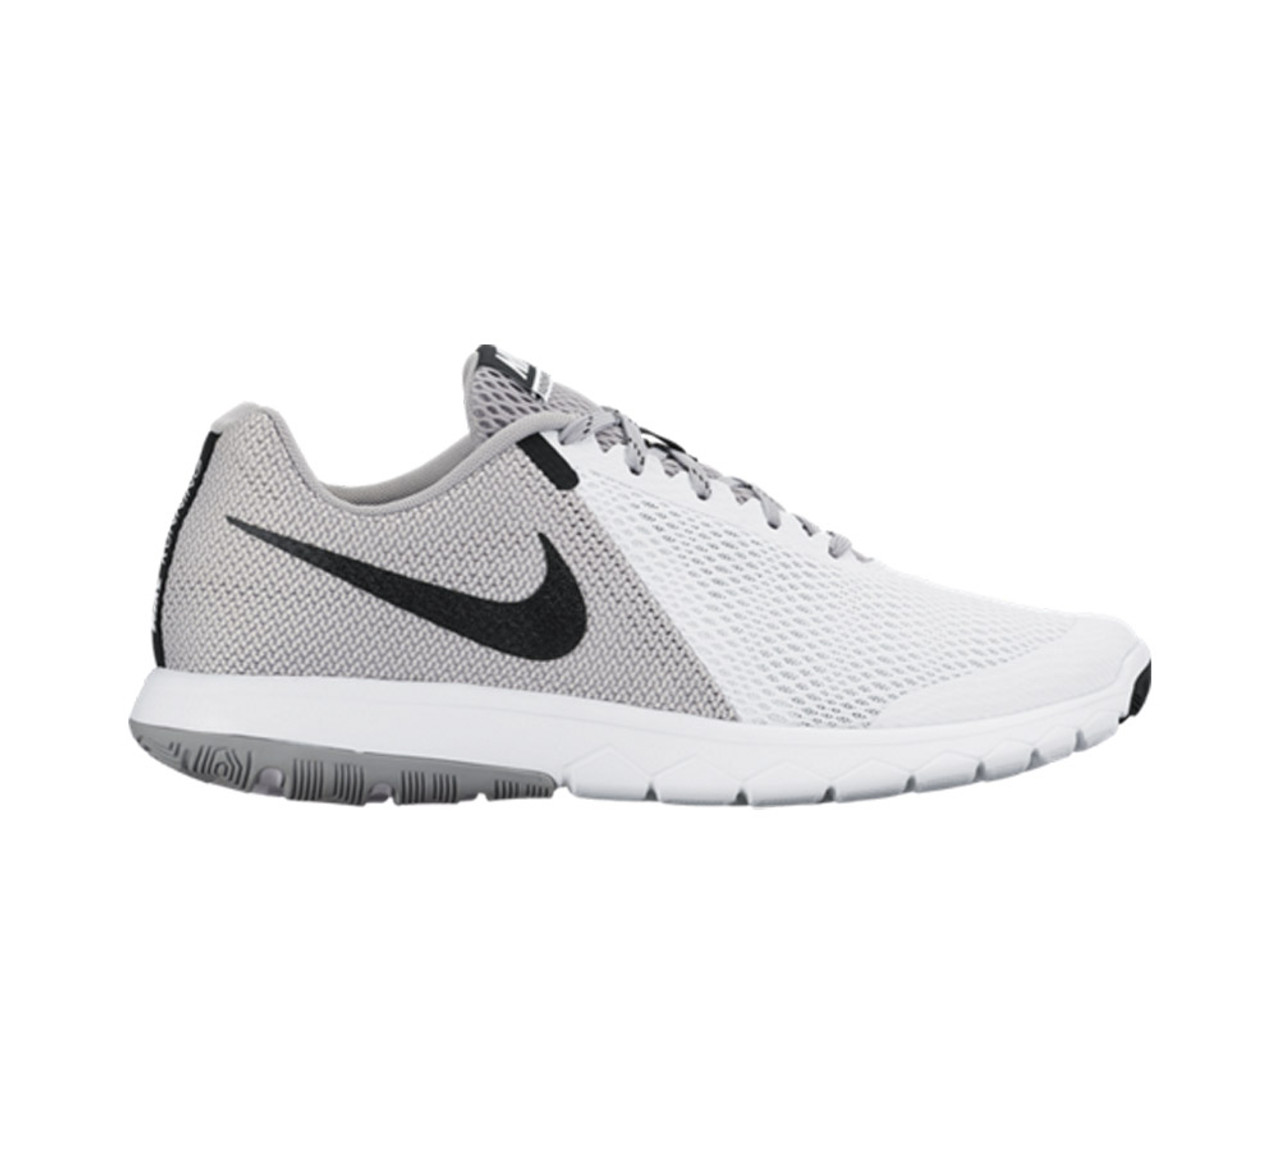 Nike Men's Flex Experience RN 5 Running Shoe - White | Discount Nike Men's Athletic More - Shoolu.com | Shoolu.com